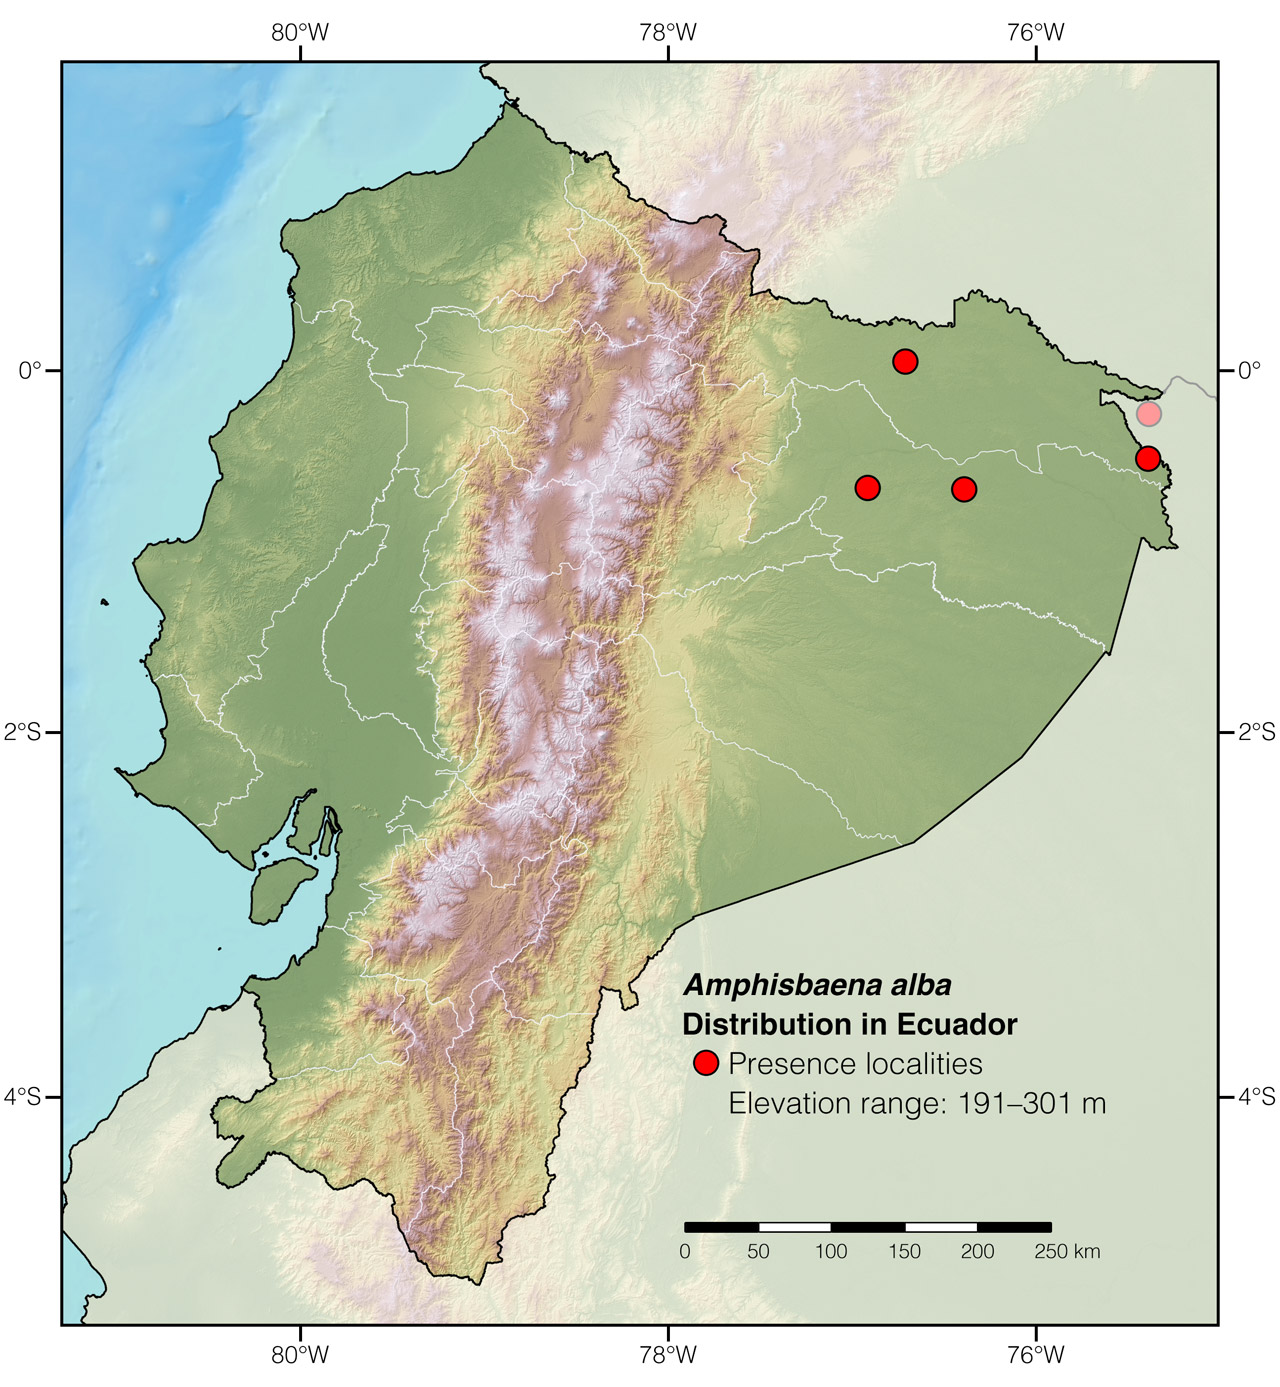 Distribution of Amphisbaena alba in Ecuador